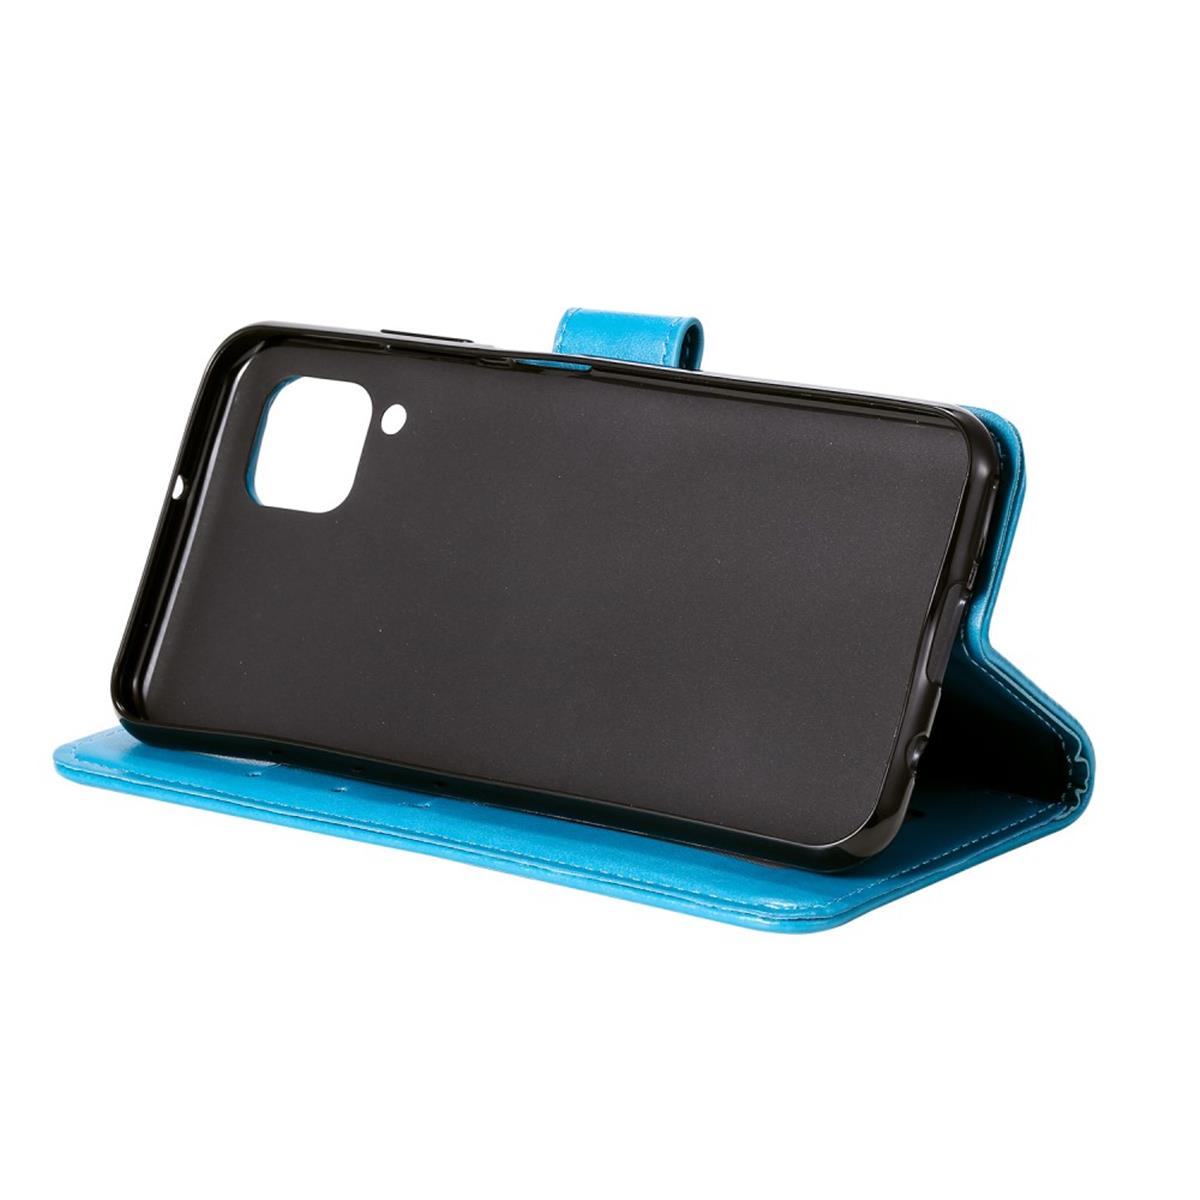 Hülle für Samsung Galaxy A22 4G Handyhülle Flip Case Cover Tasche Mandala Blau